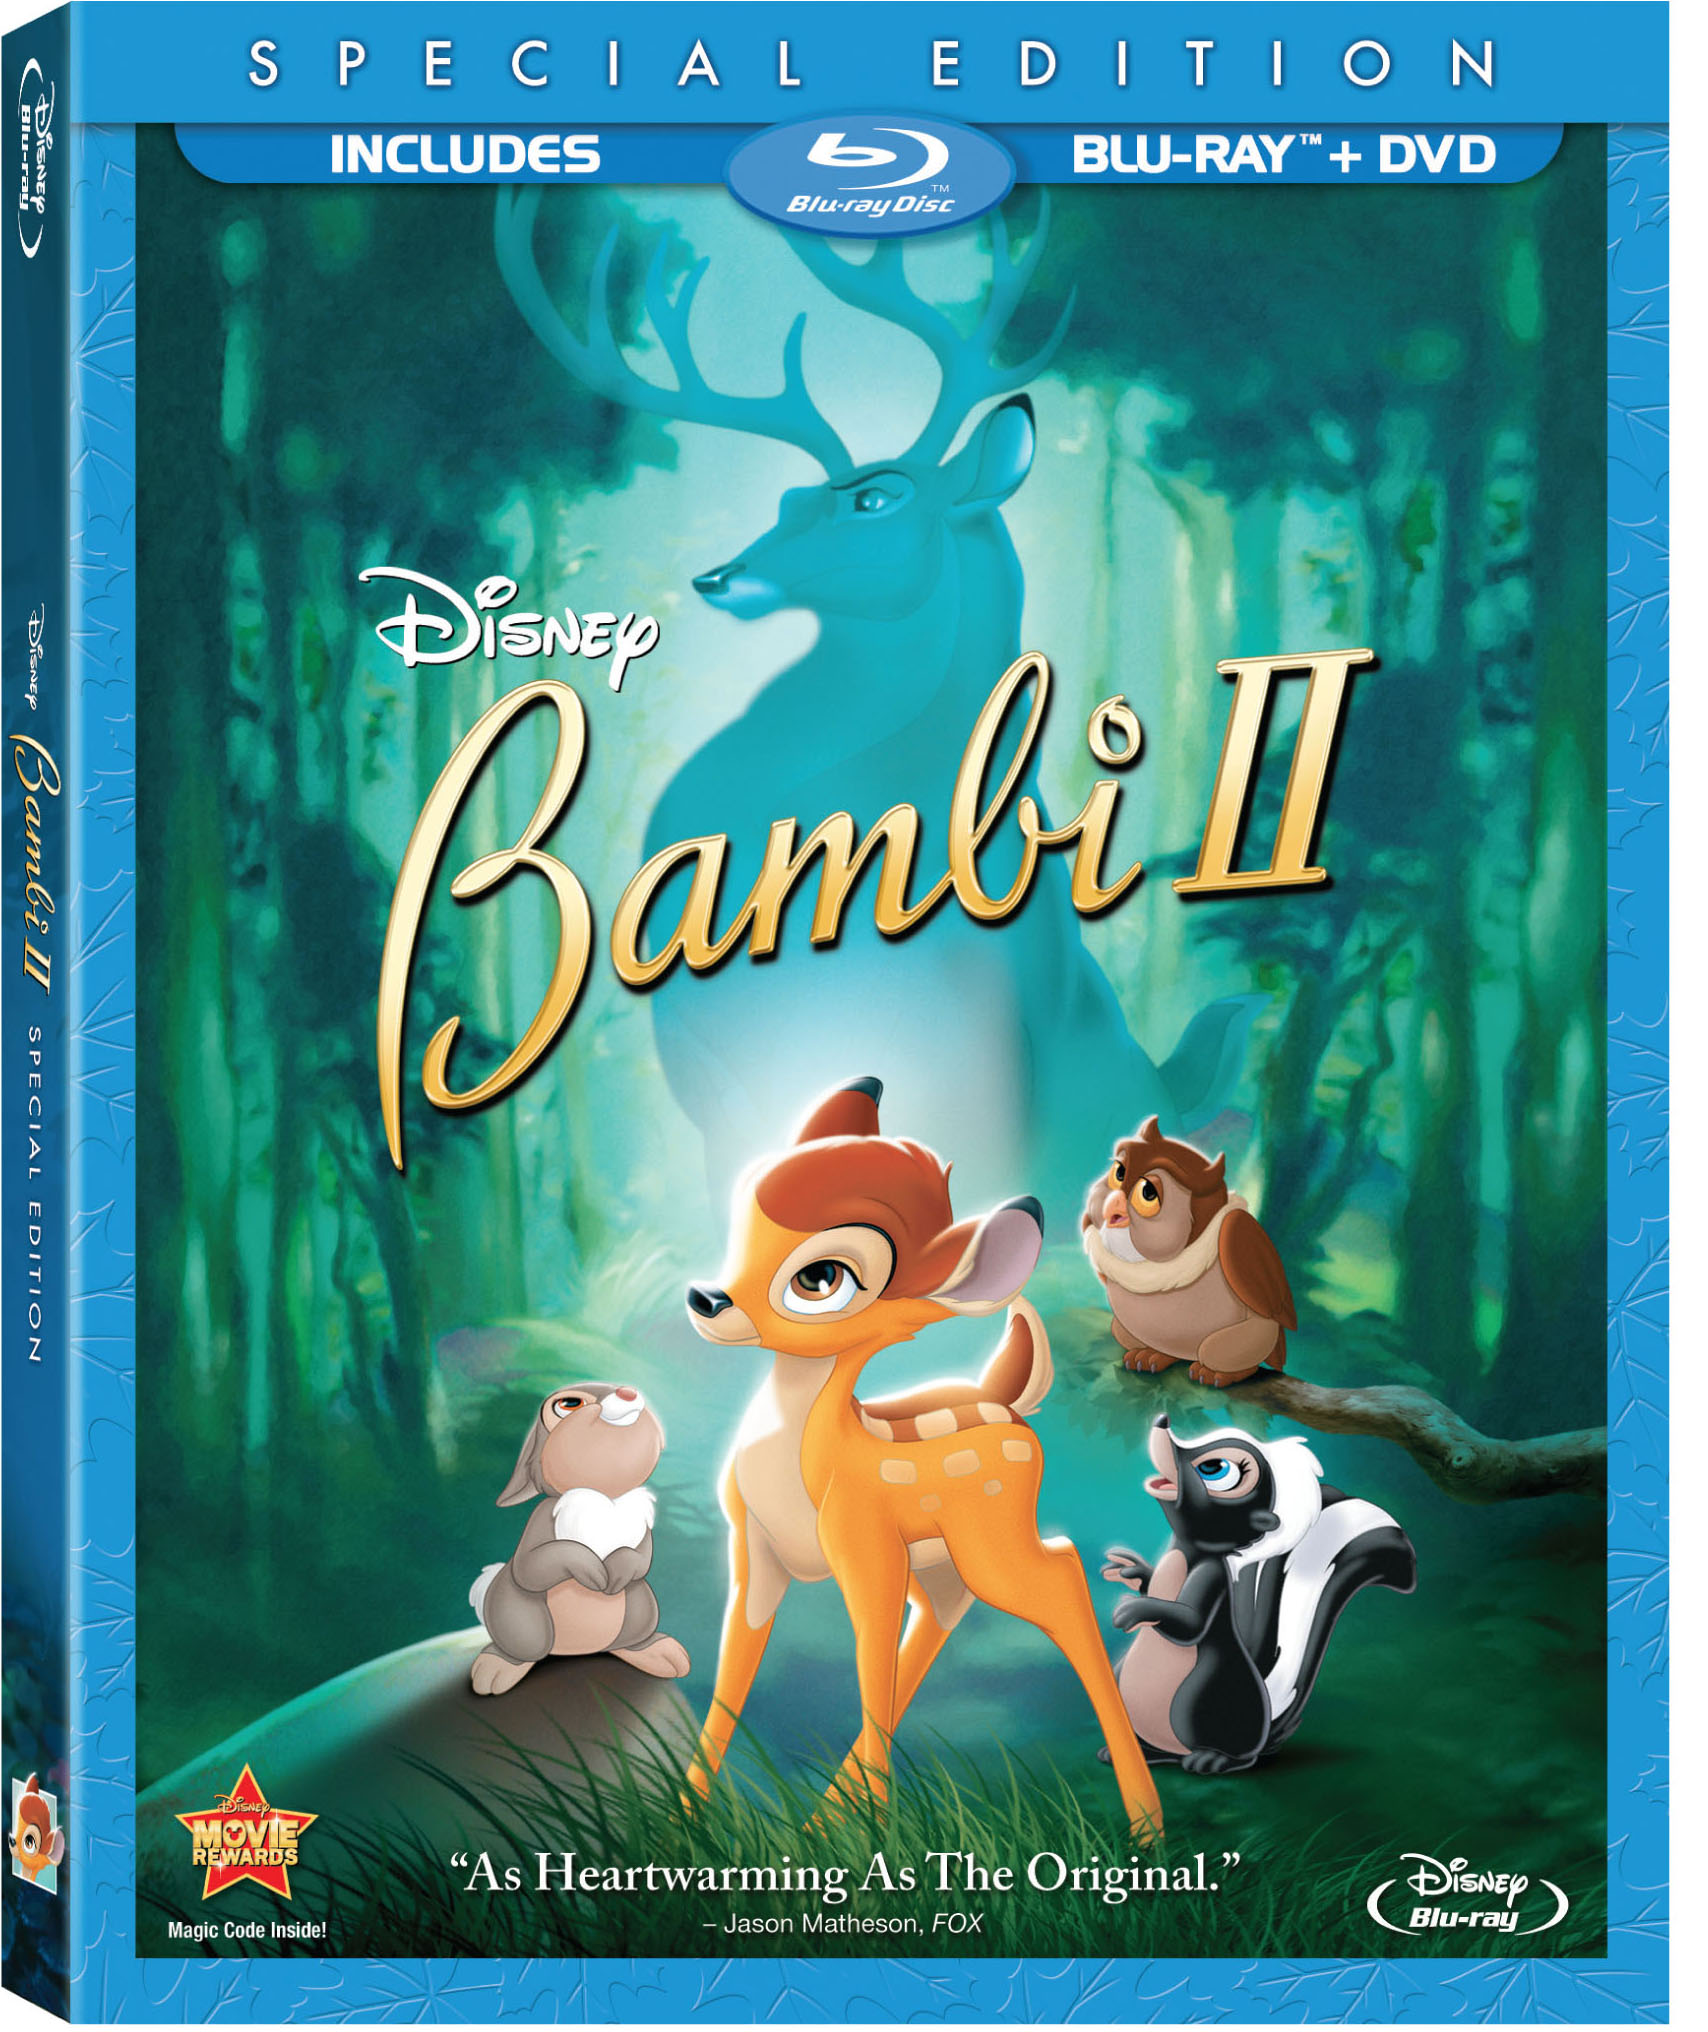 Сказки дисней новинка. DVD Disney DVD Бэмби. Bambi 2 Blu ray обложка.